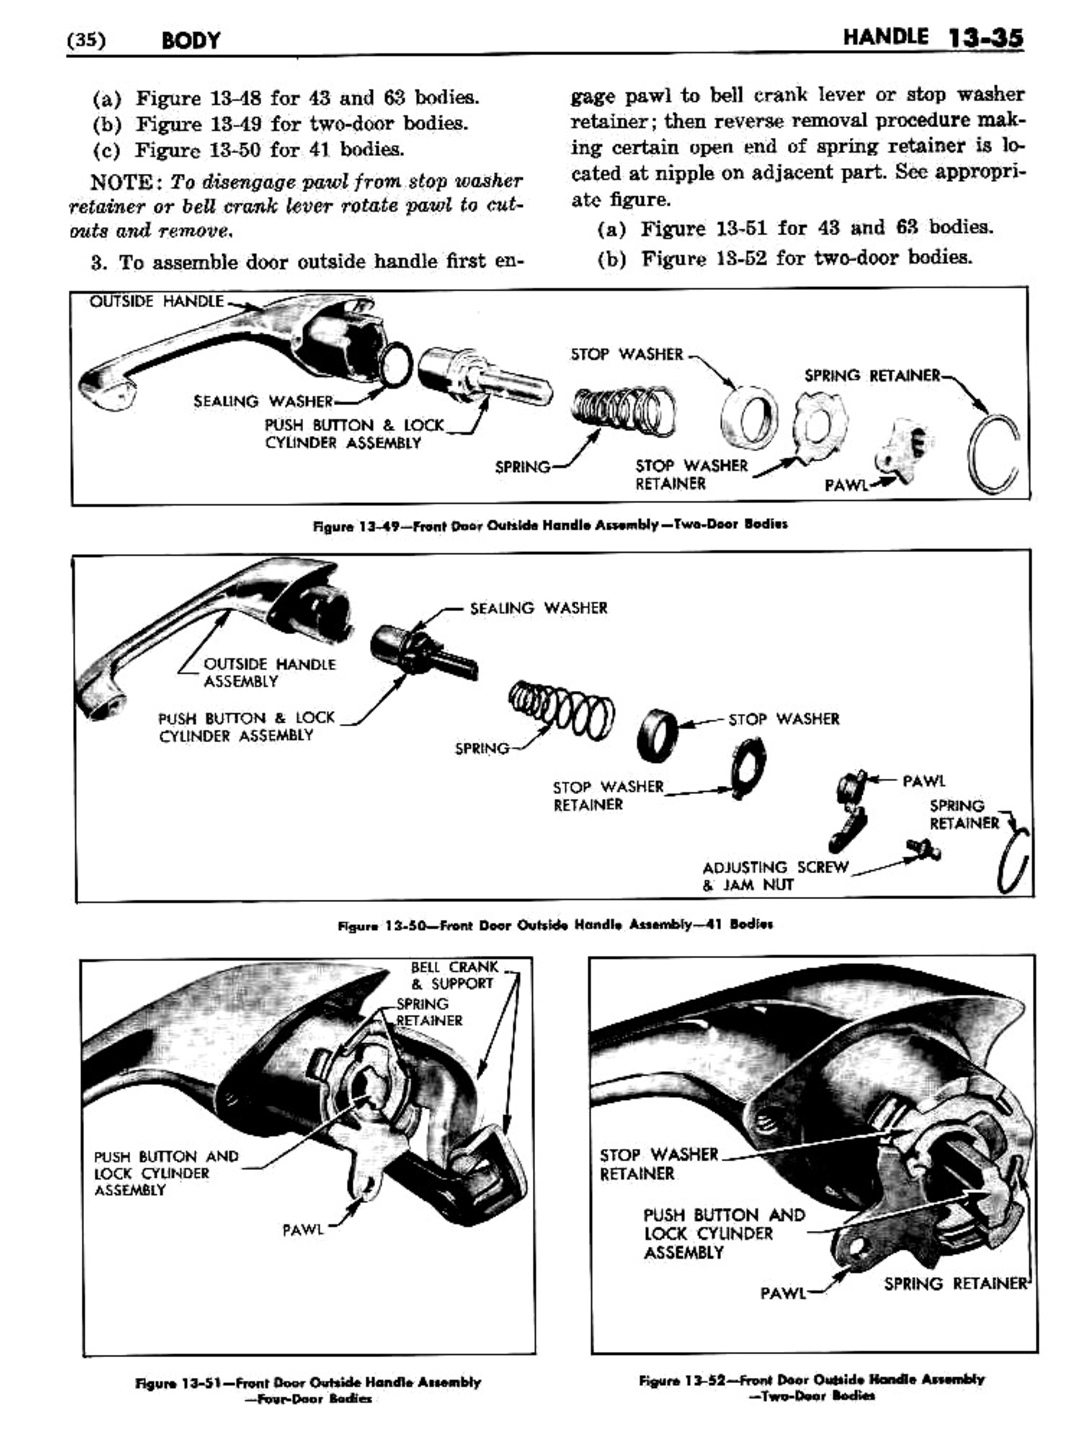 n_1957 Buick Body Service Manual-037-037.jpg